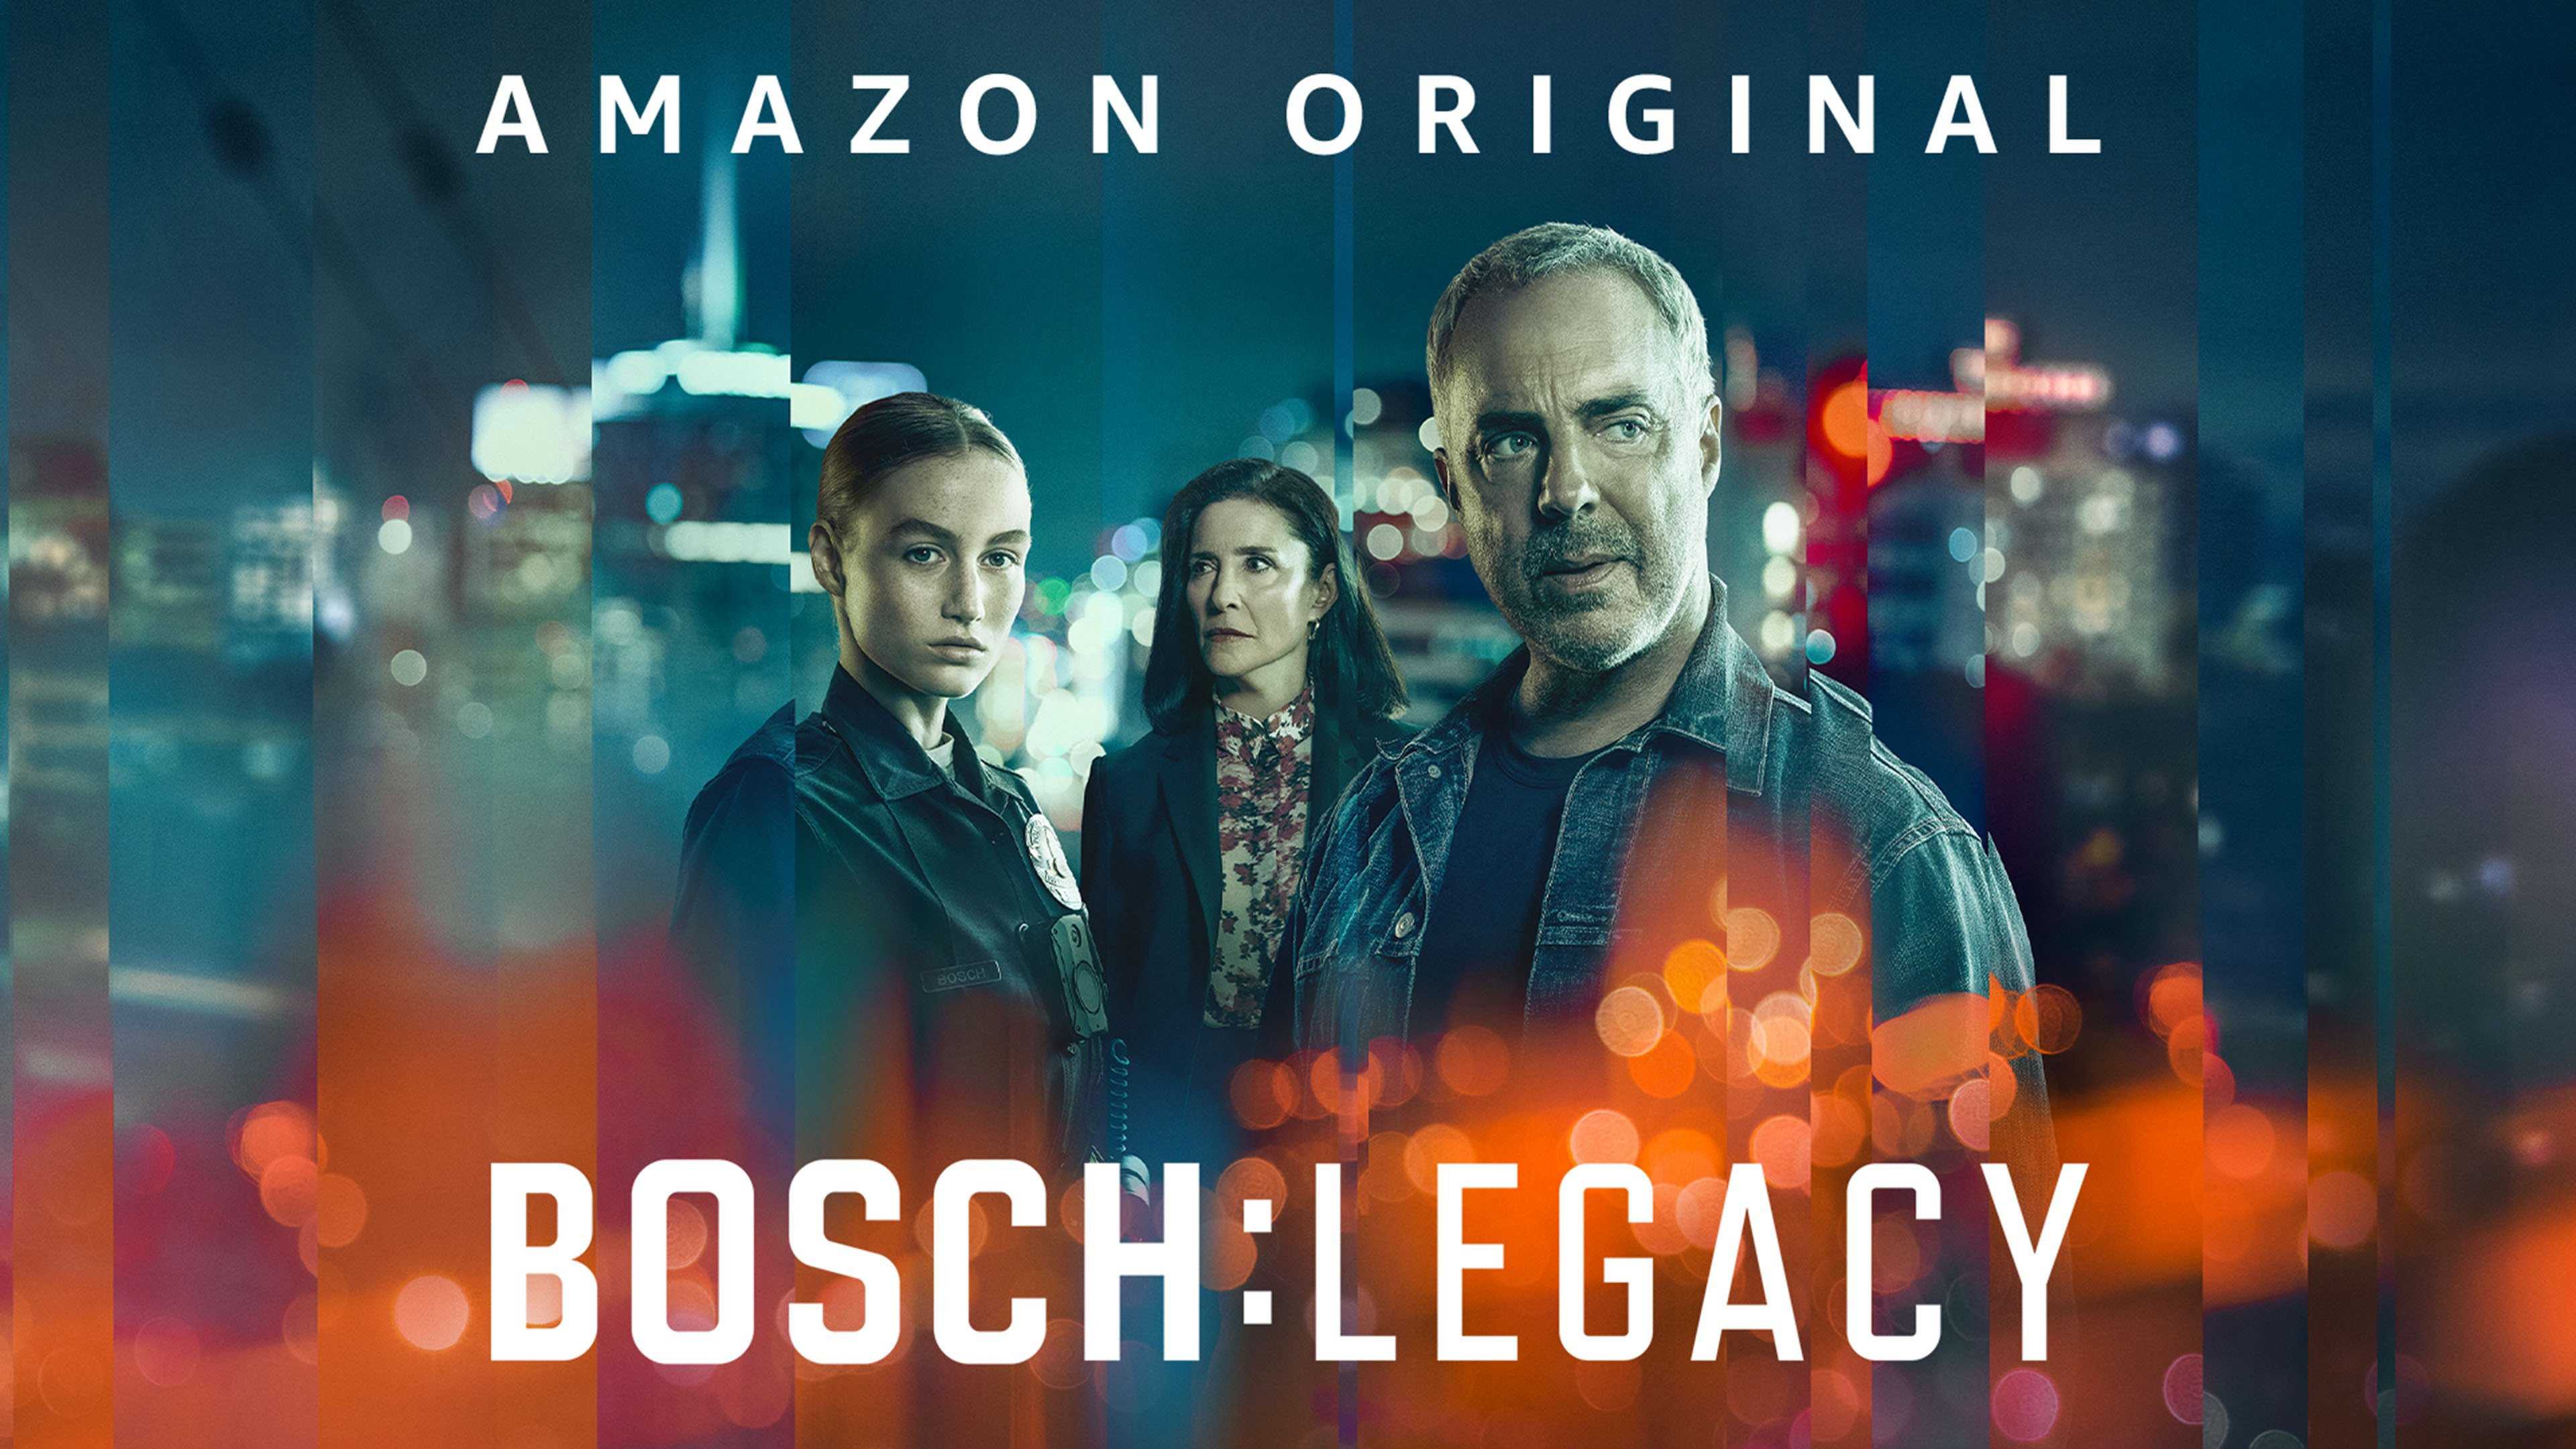 Bosch: Legacy Phần 1